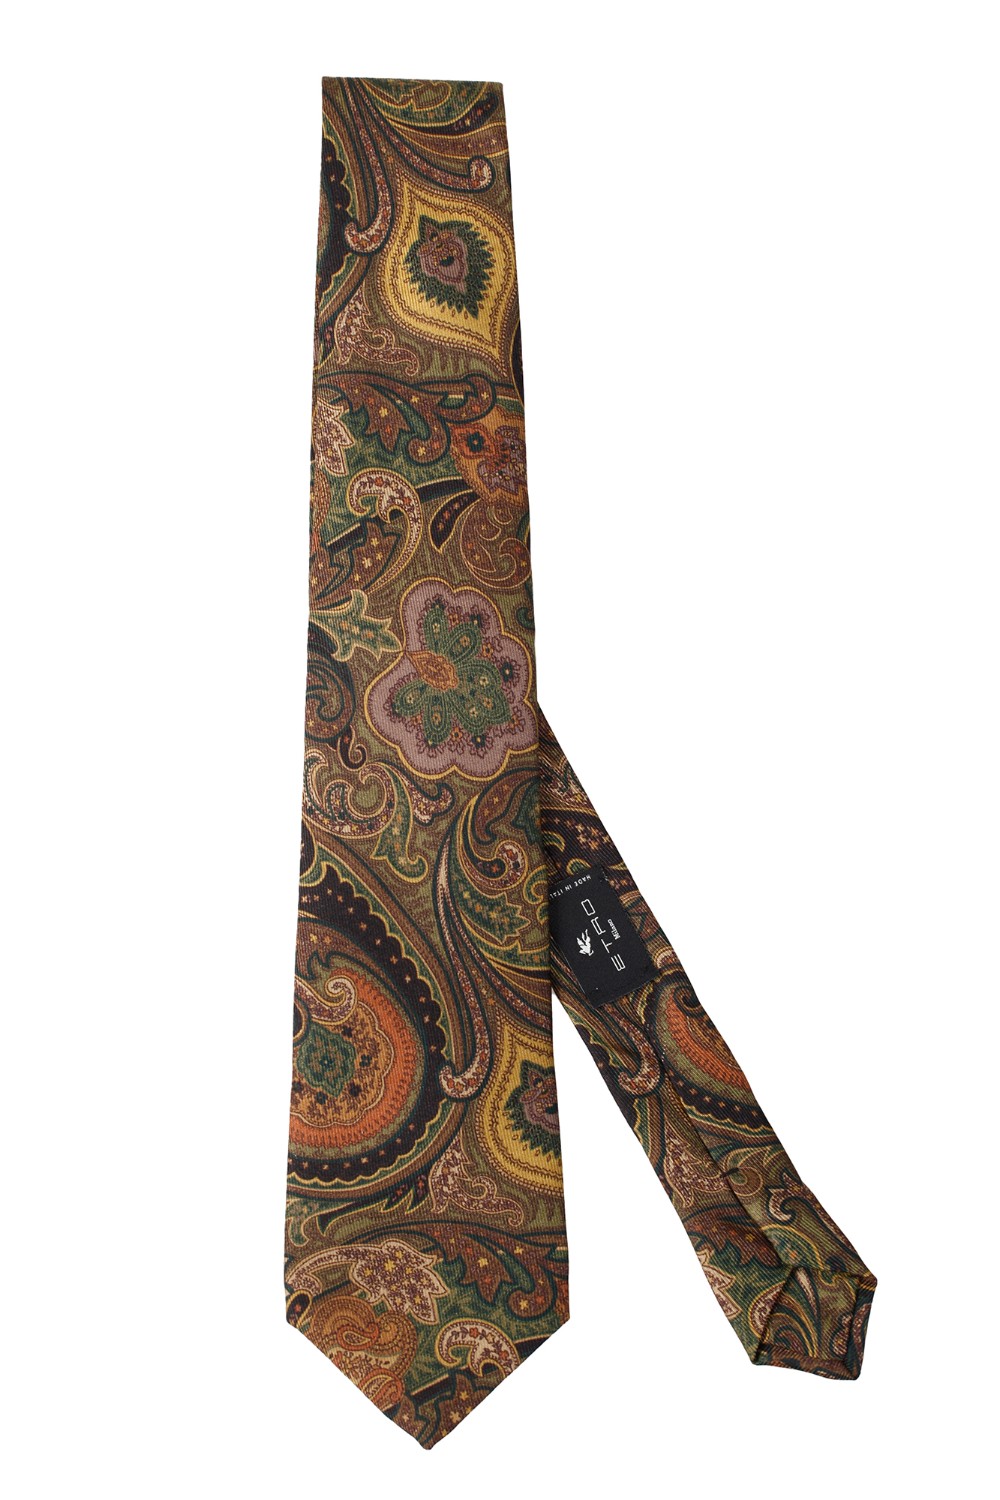 shop ETRO  Cravatta: Etro cravatta in seta con stampa paisley.
Larghezza 8 cm.
Composizione: 100% seta.
Made in Italy.. 12026 4090-0500 number 8027346